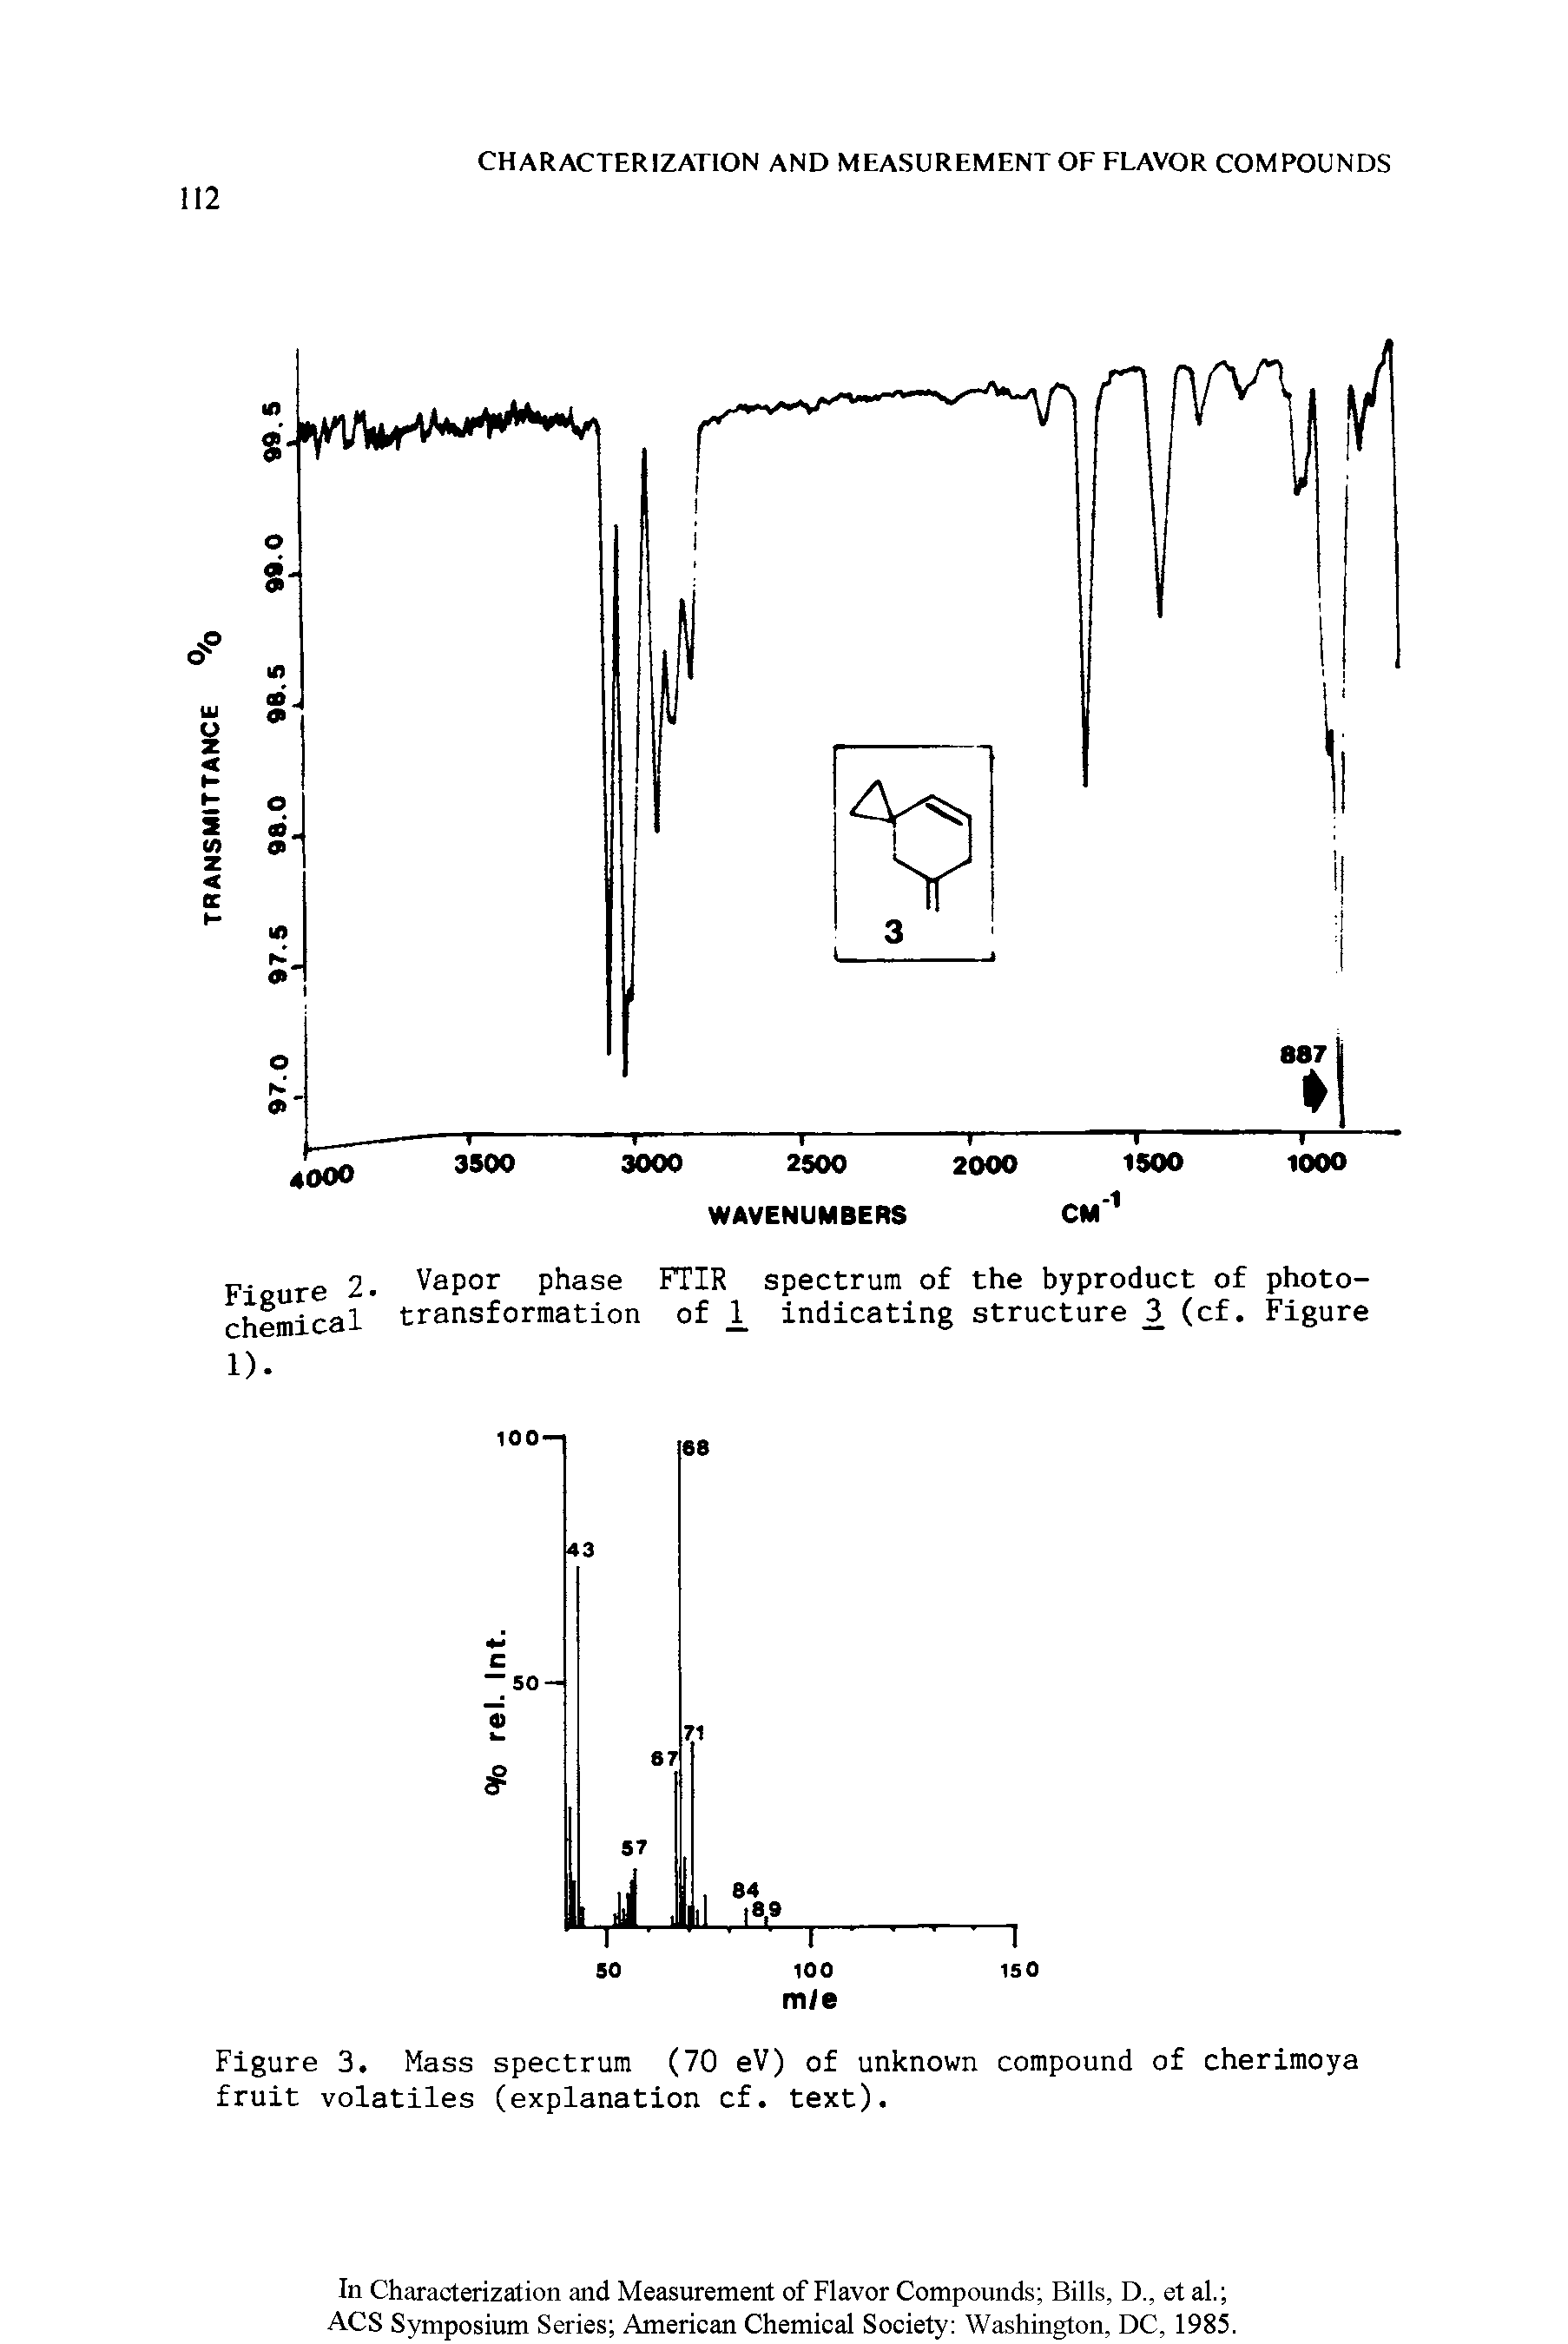 Figure 3. Mass spectrum (70 eV) of unknown compound of cherimoya fruit volatiles (explanation cf. text).